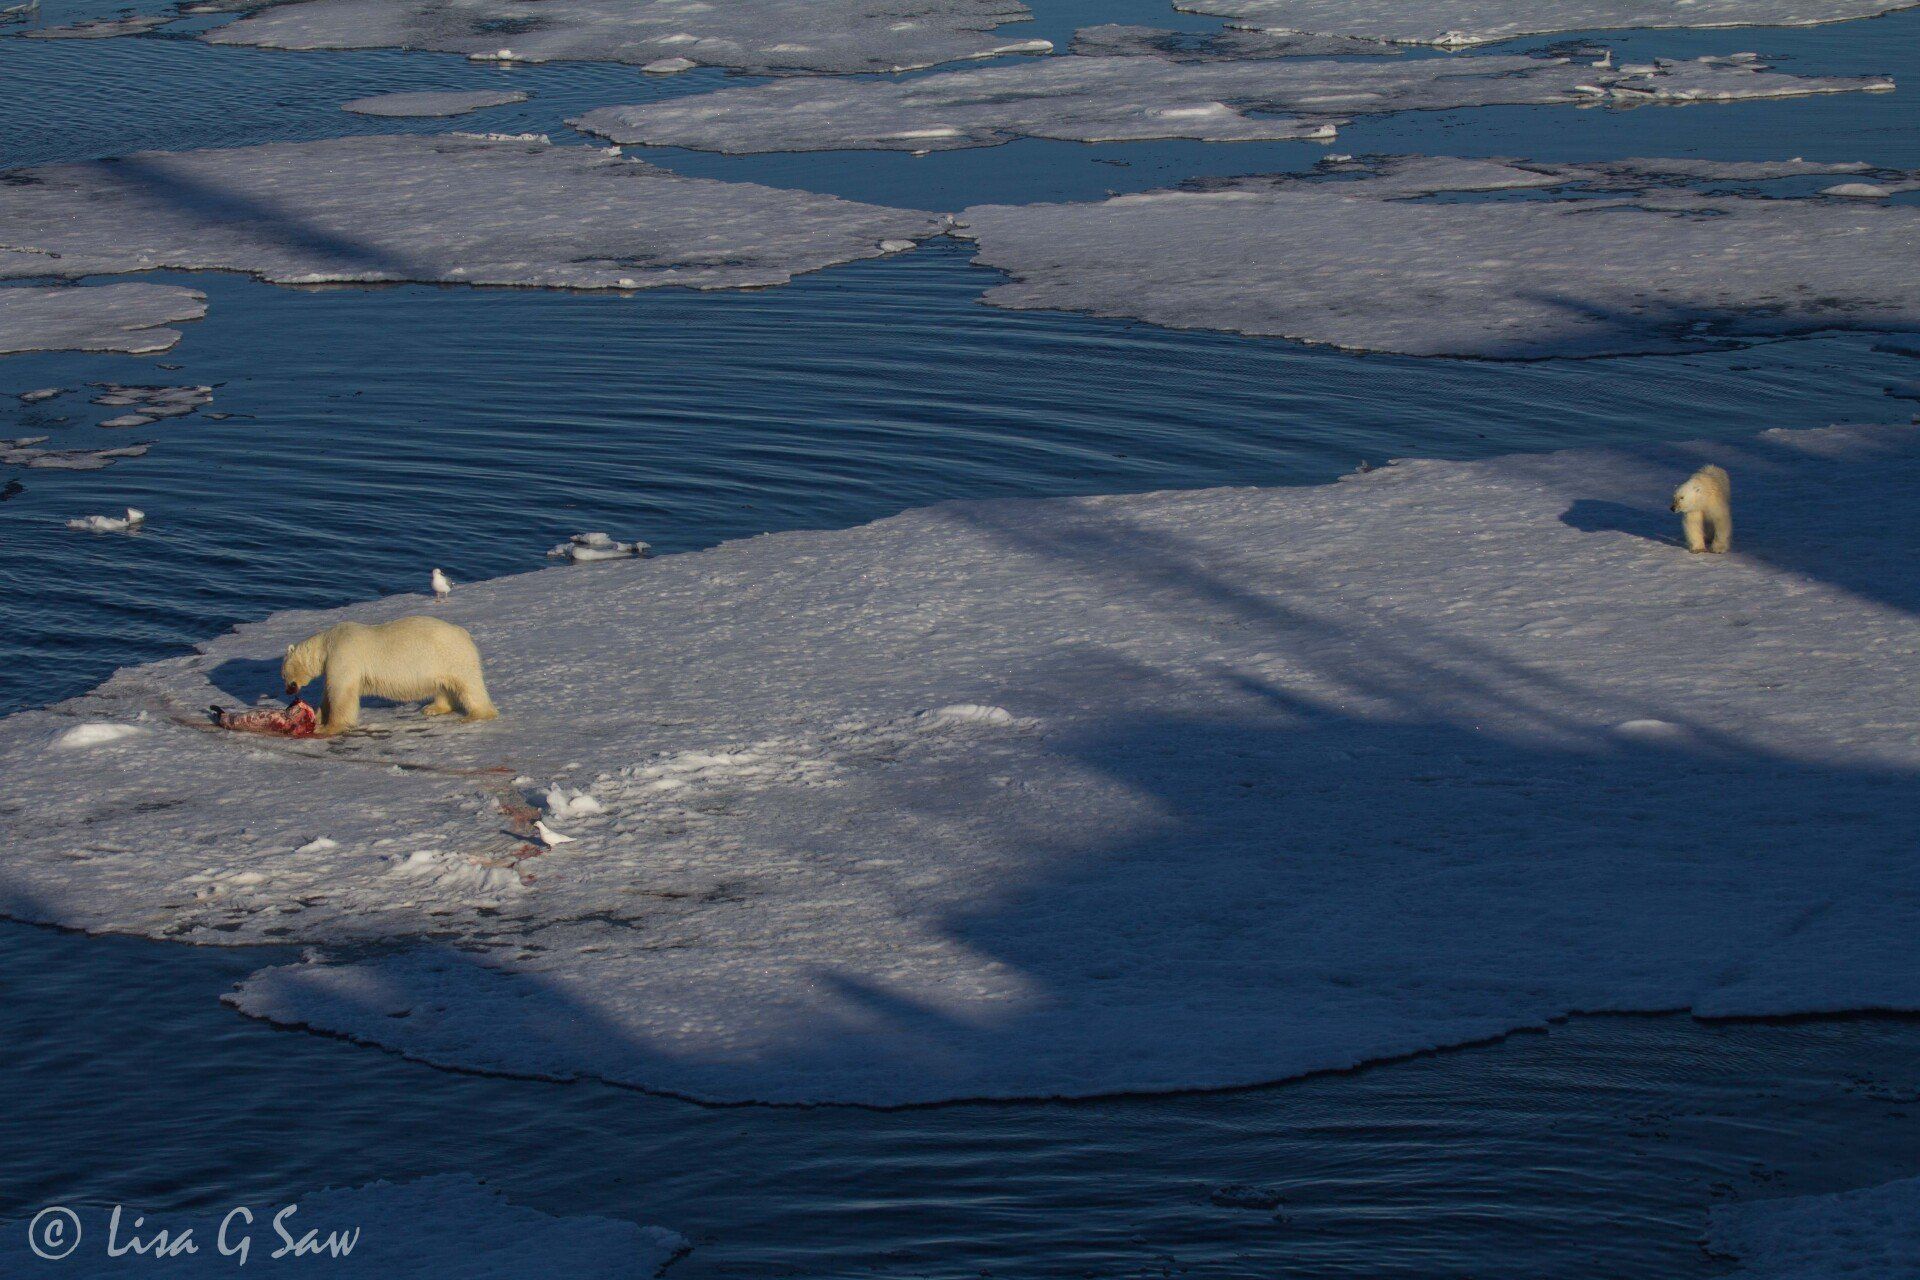 Two Polar Bears on same ice floe, one with seal carcass